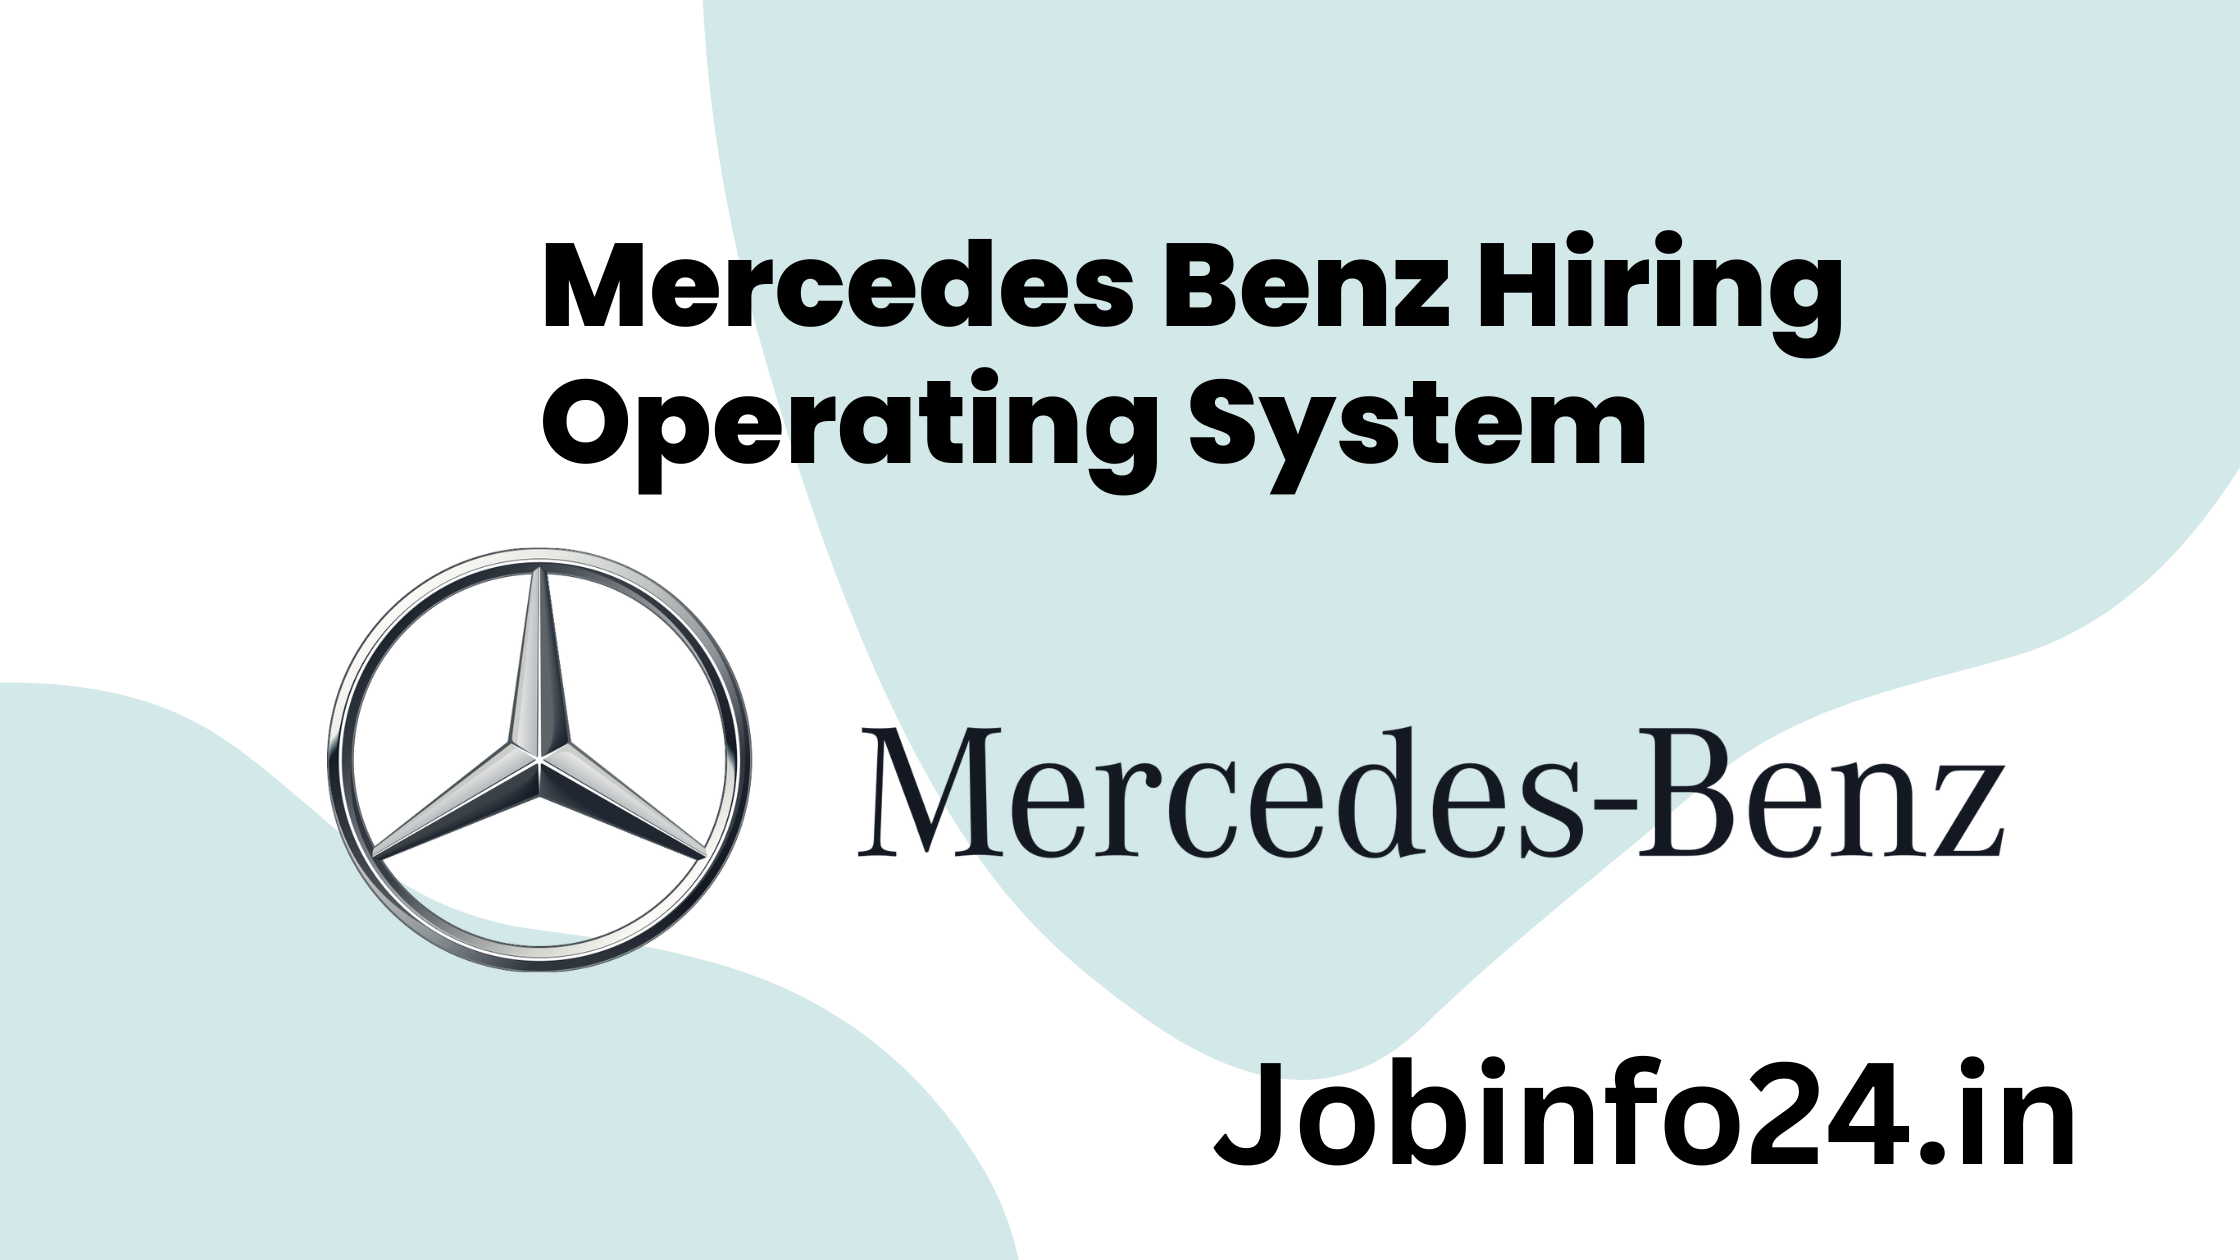 Mercedes Benz Hiring Operating System